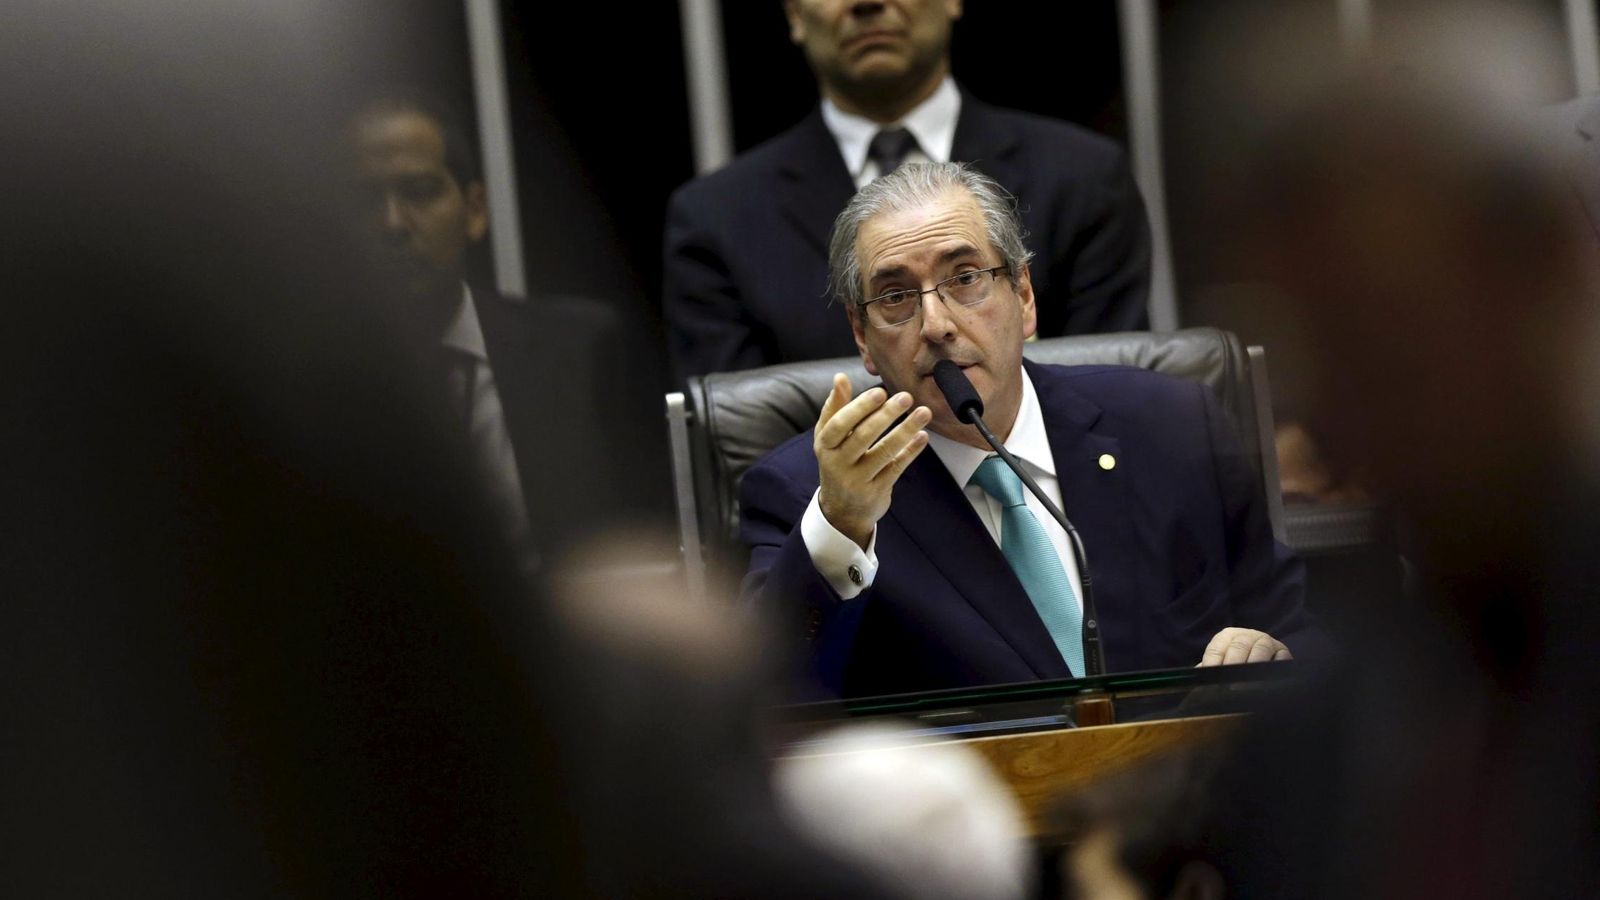 Foto: El presidente de la Cámara de Diputados brasileña, Eduardo Cunha, durante una sesión de la cámara en Brasilia, el 6 de agosto de 2015 (Reuters).  